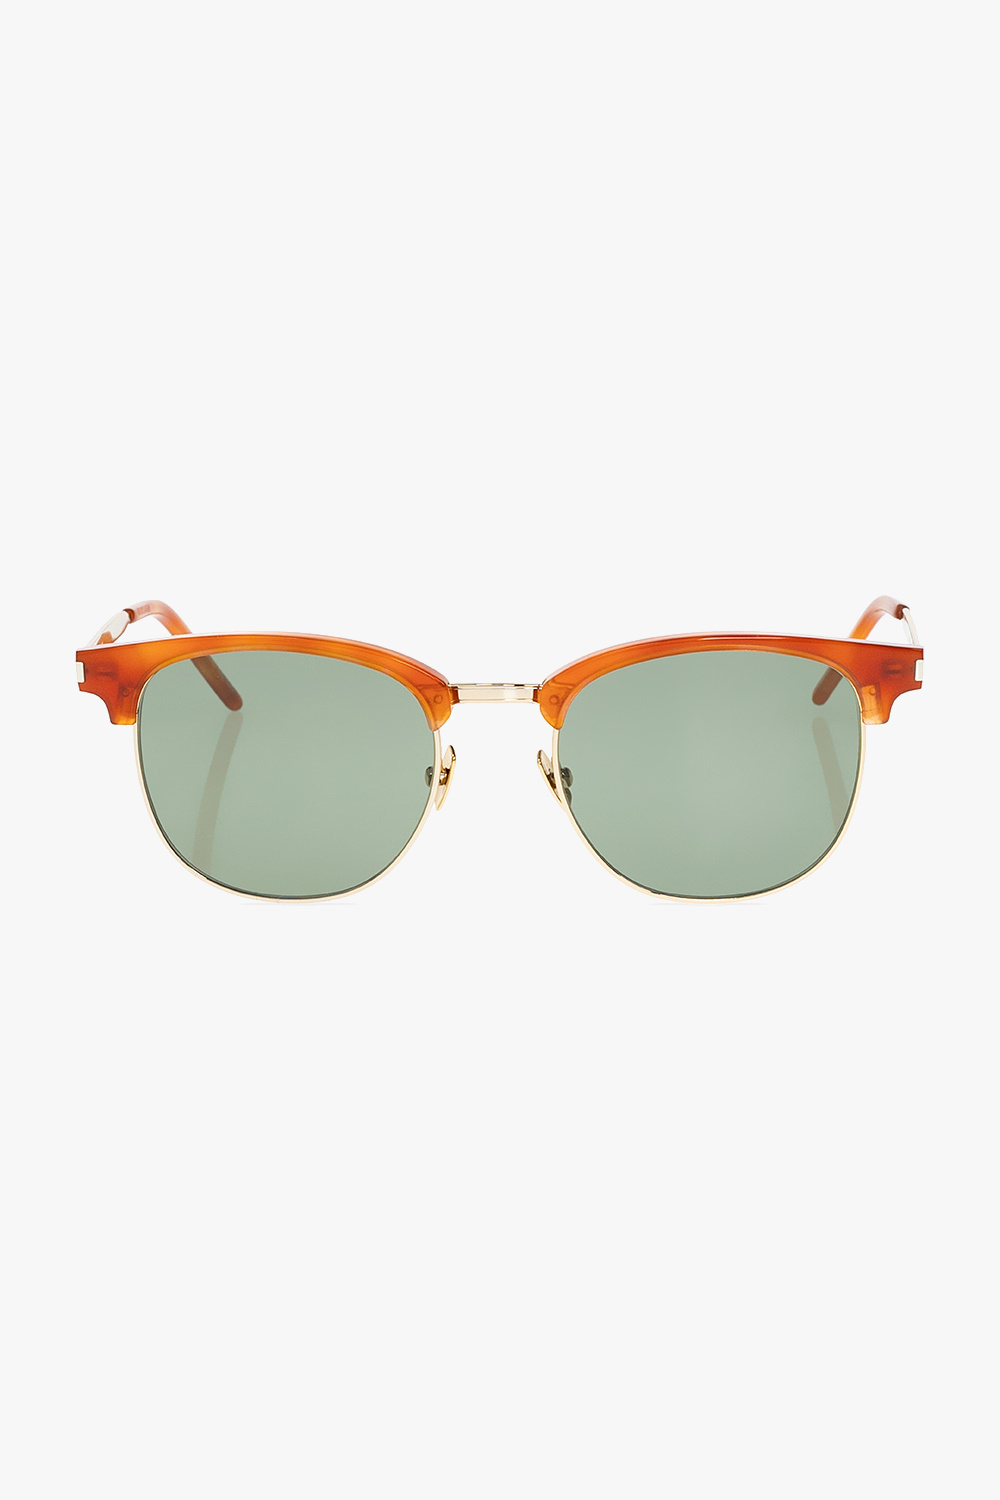 Saint Laurent ‘SL 108 Combi’ sunglasses